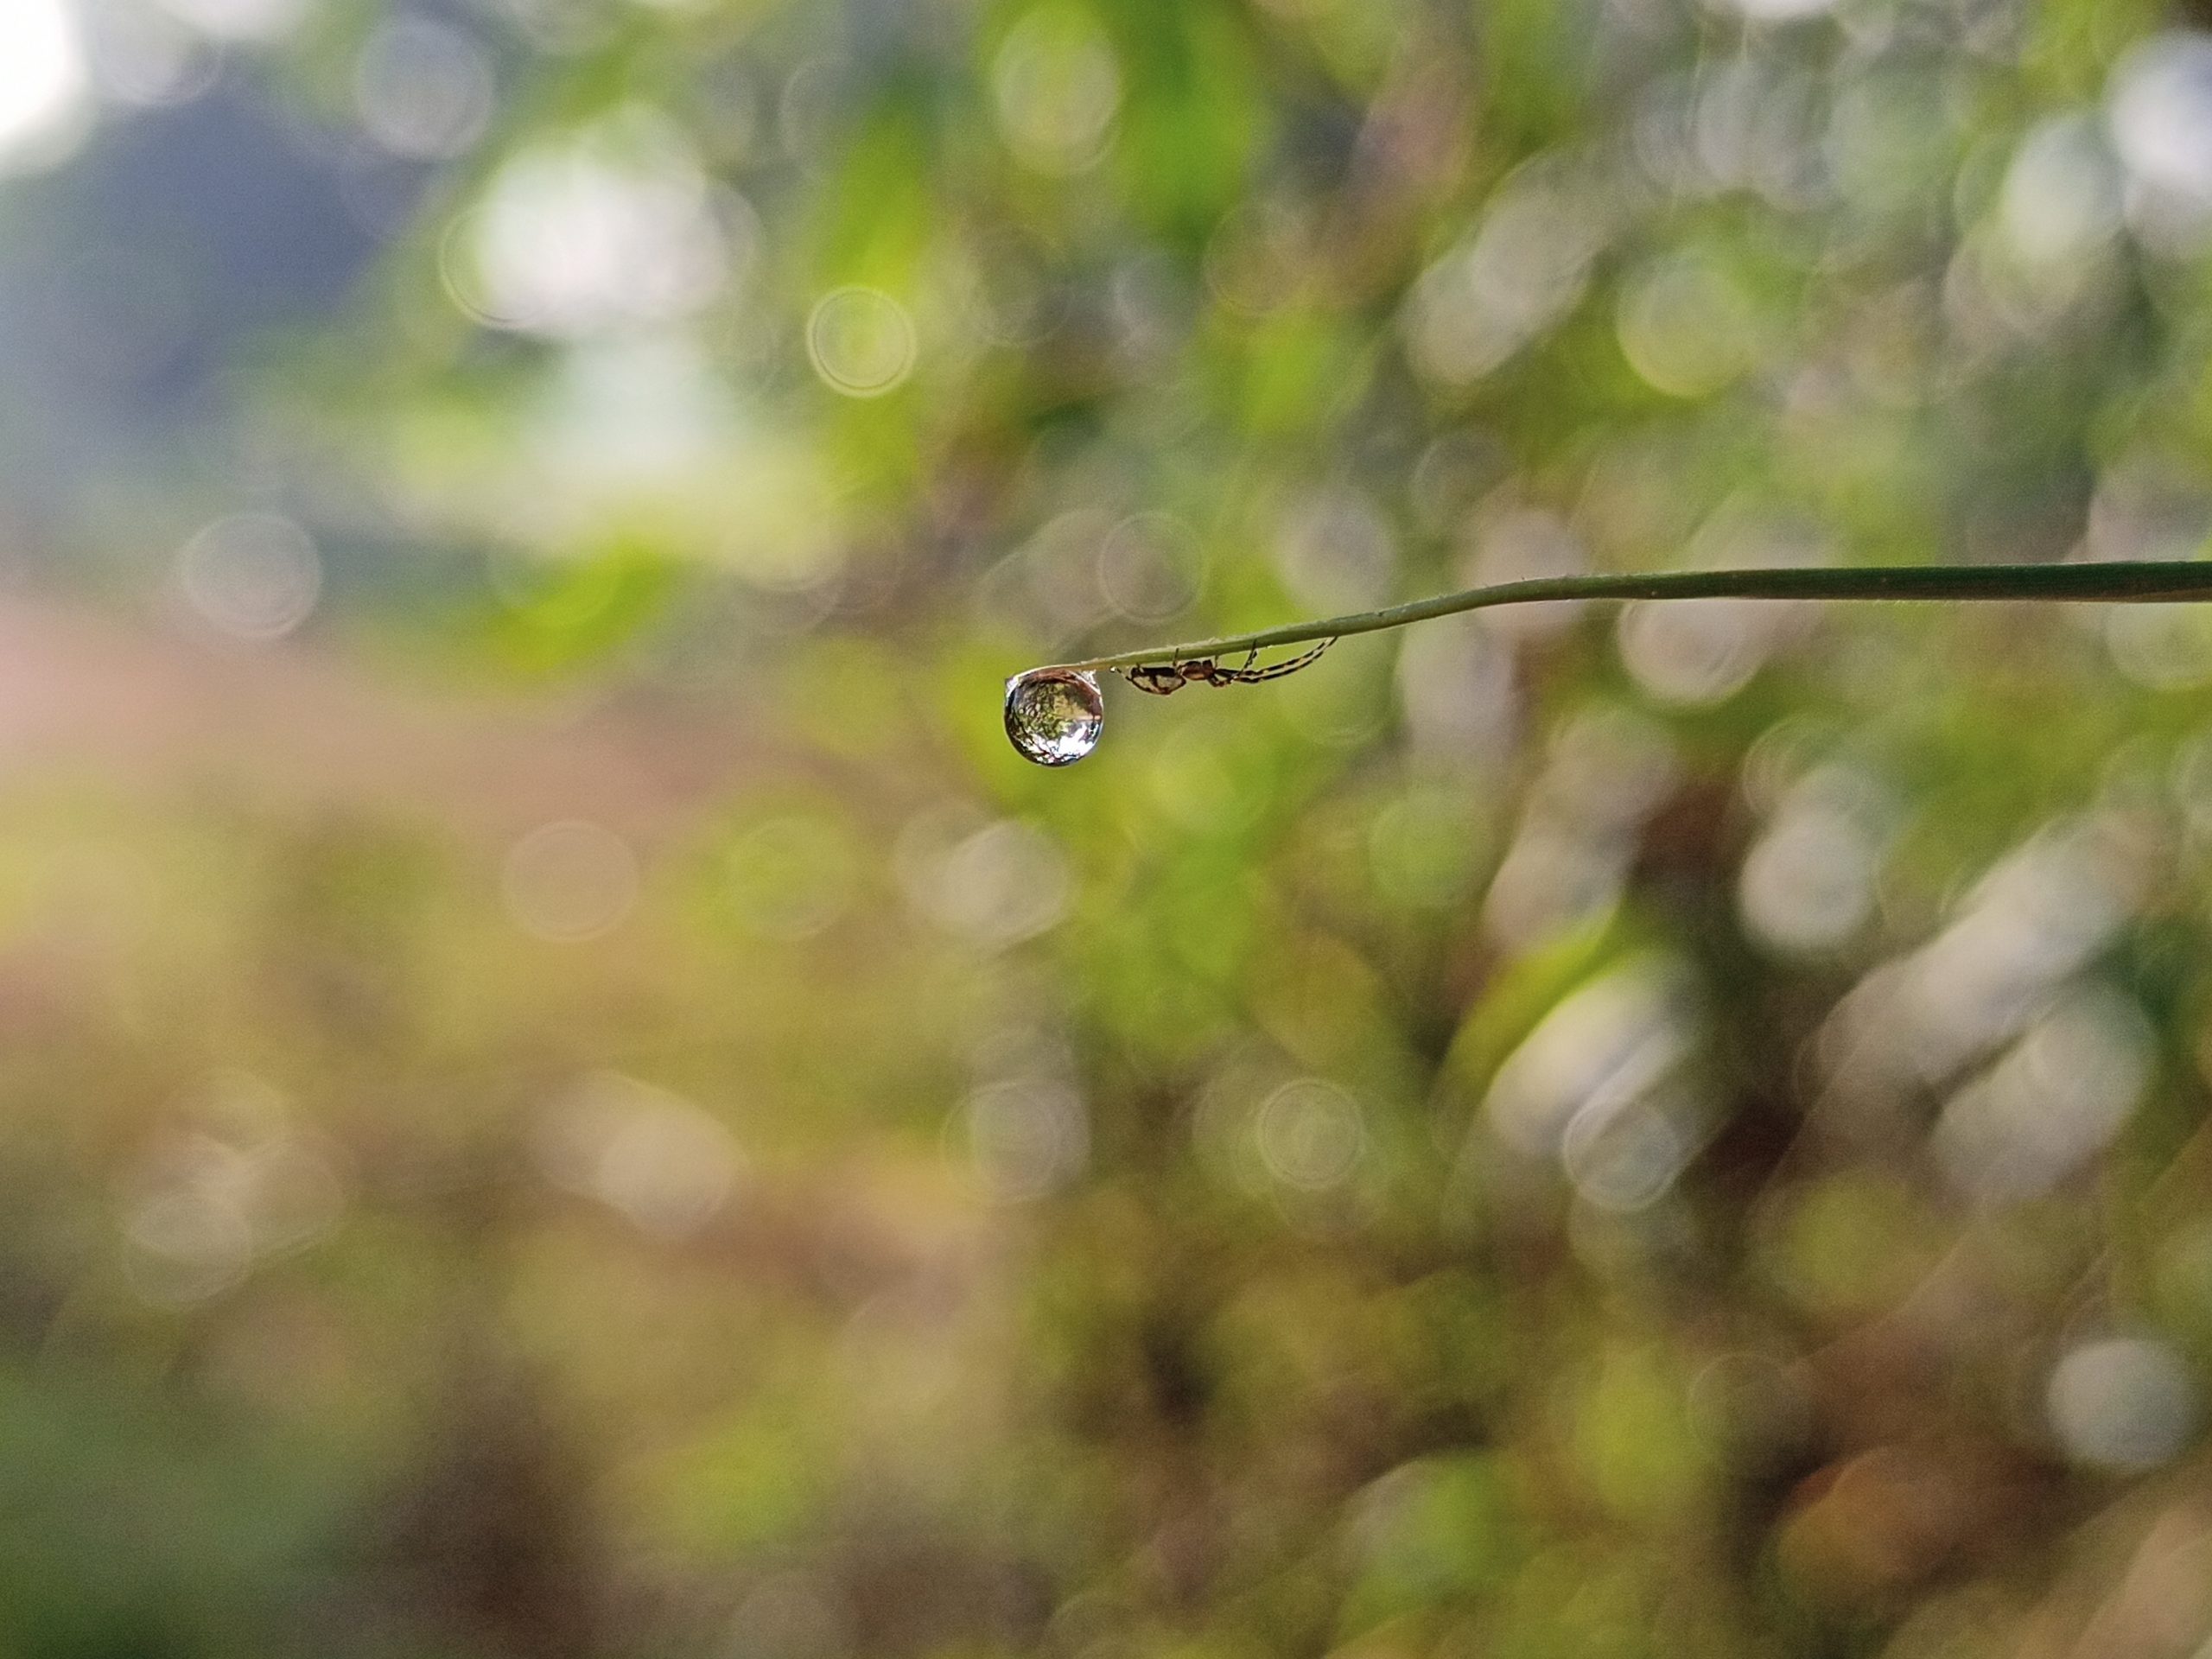 Water drop on plant stem